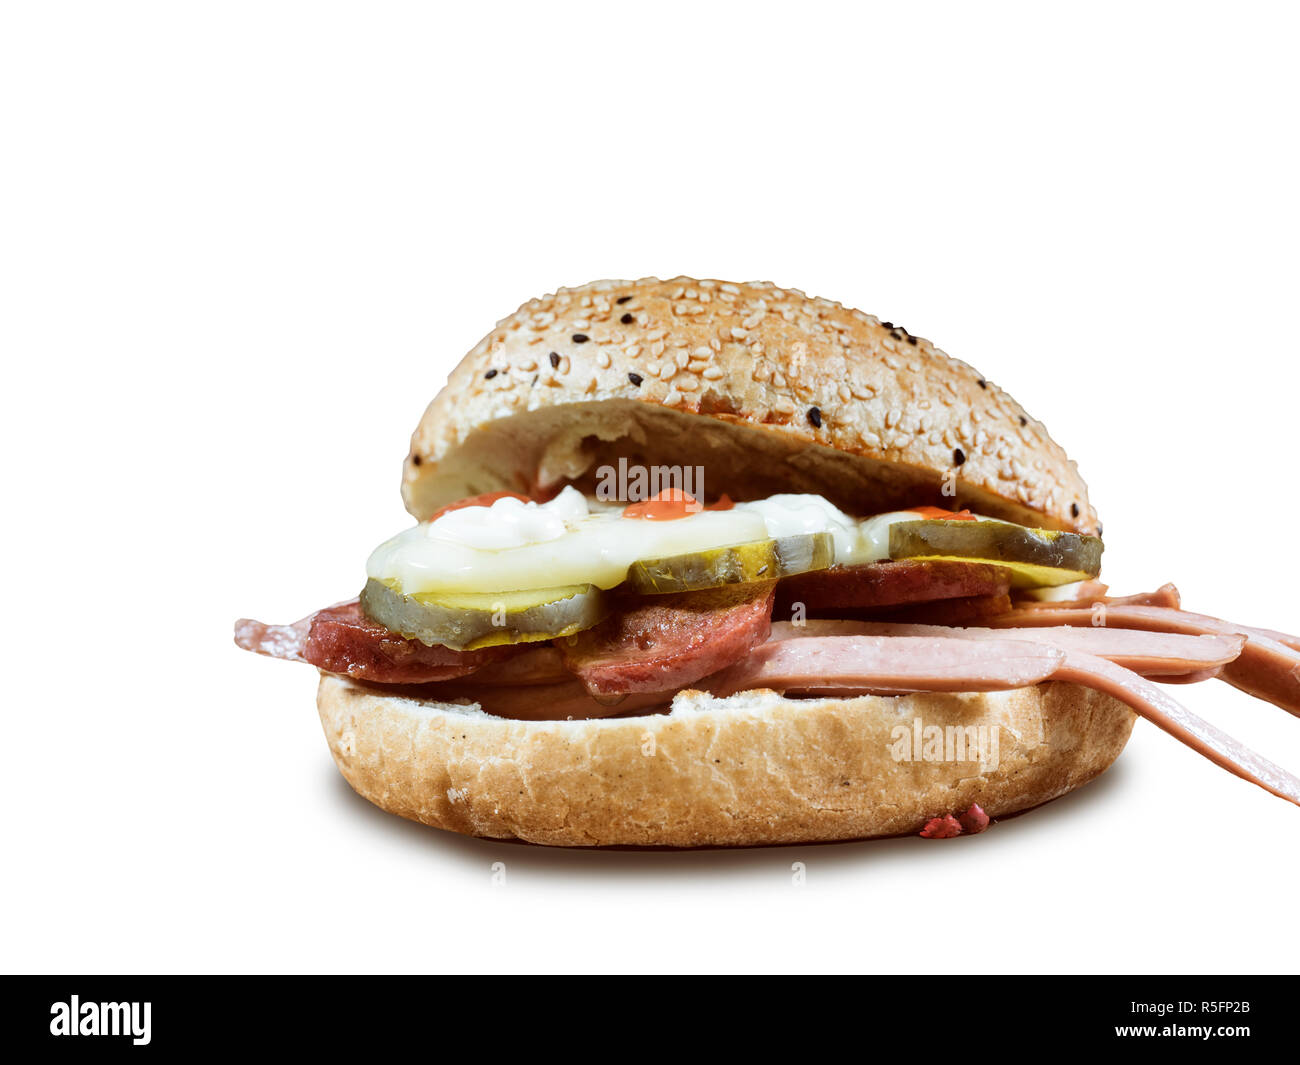 kumru sandwich released Stock Photo